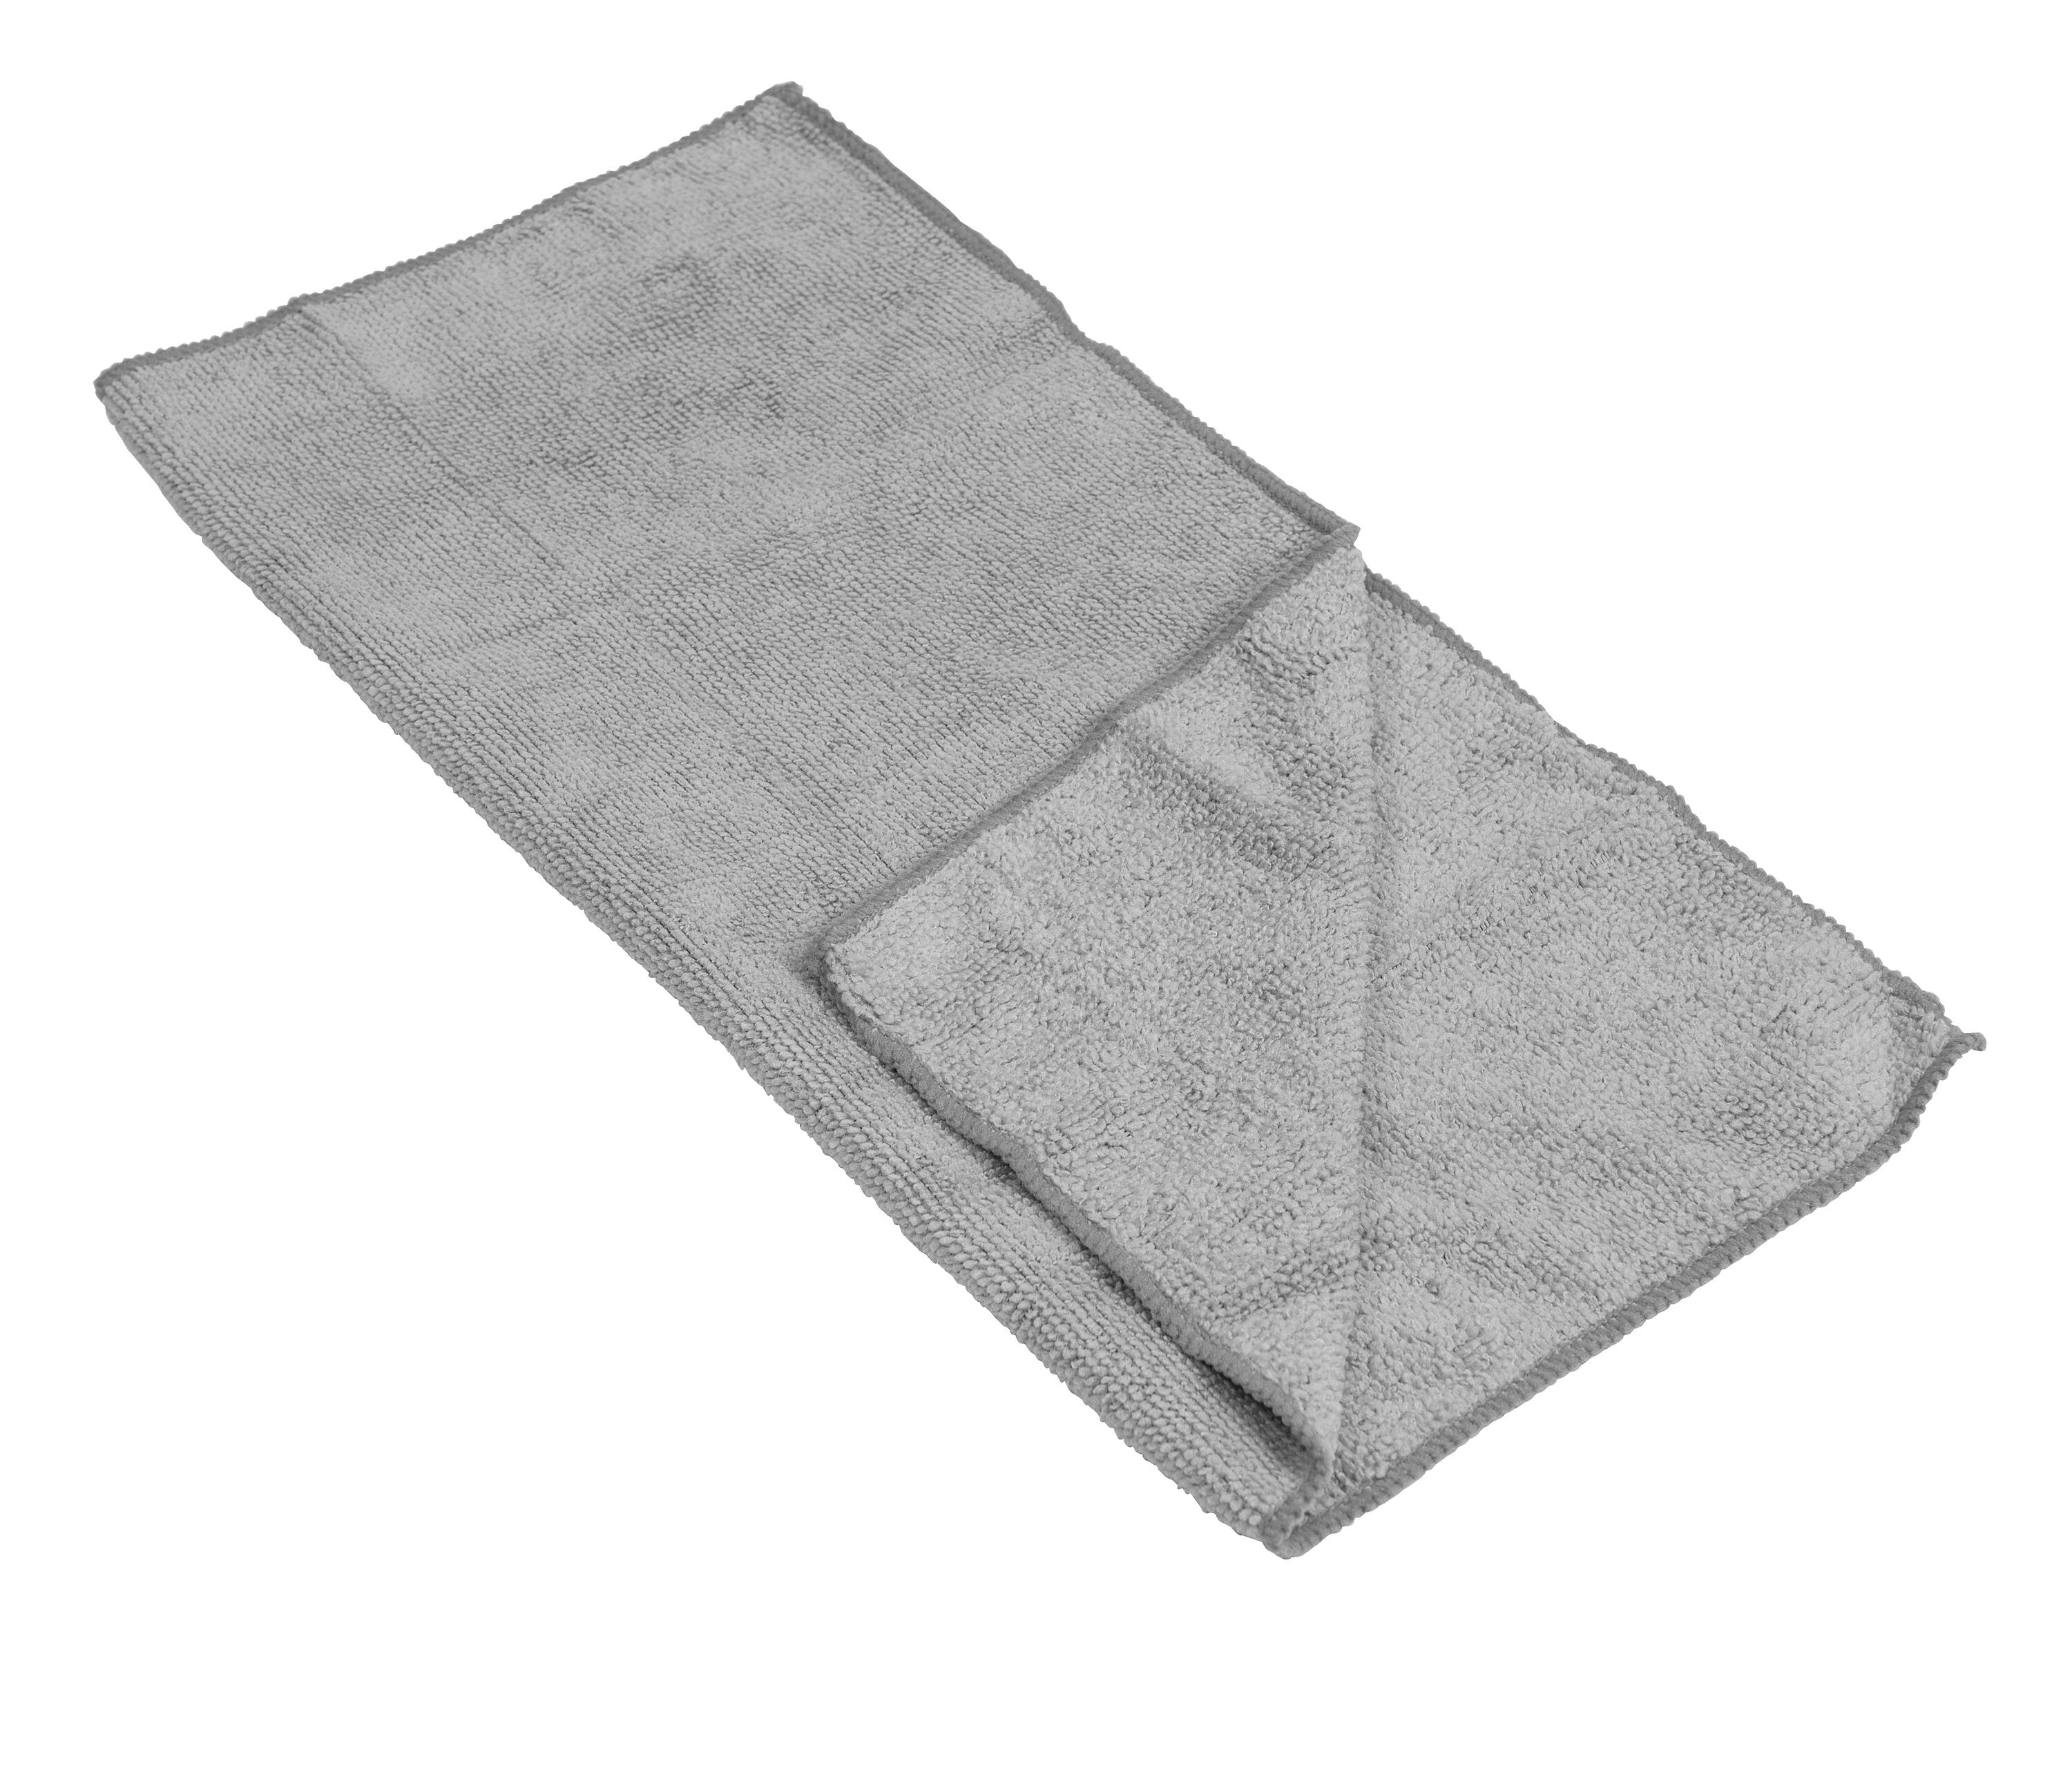 12x12 General Surface Microfiber Cloth